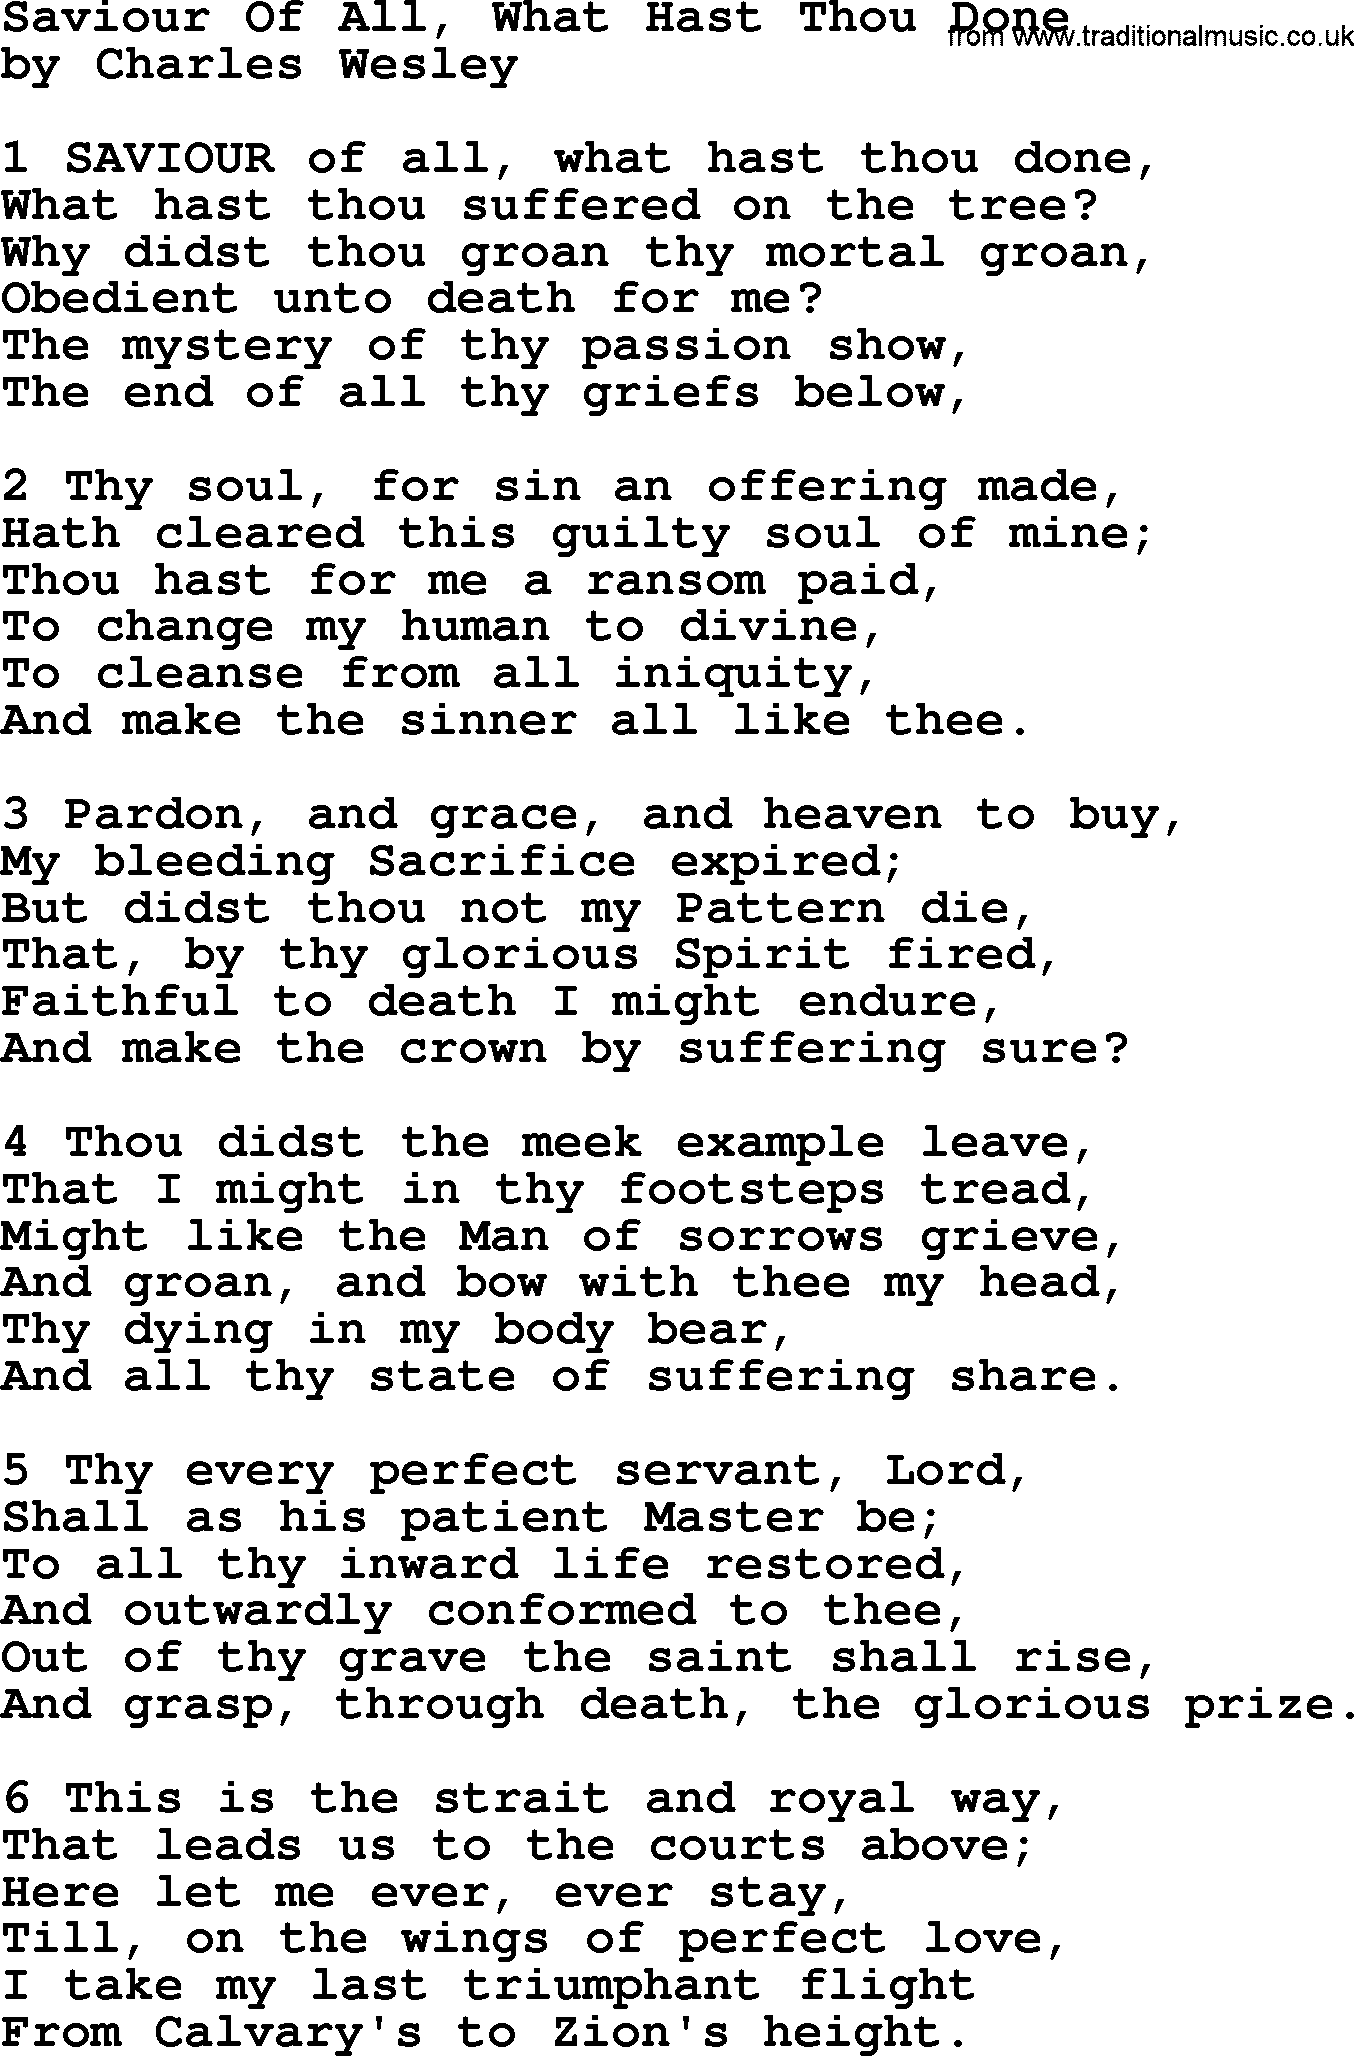 Charles Wesley hymn: Saviour Of All, What Hast Thou Done, lyrics